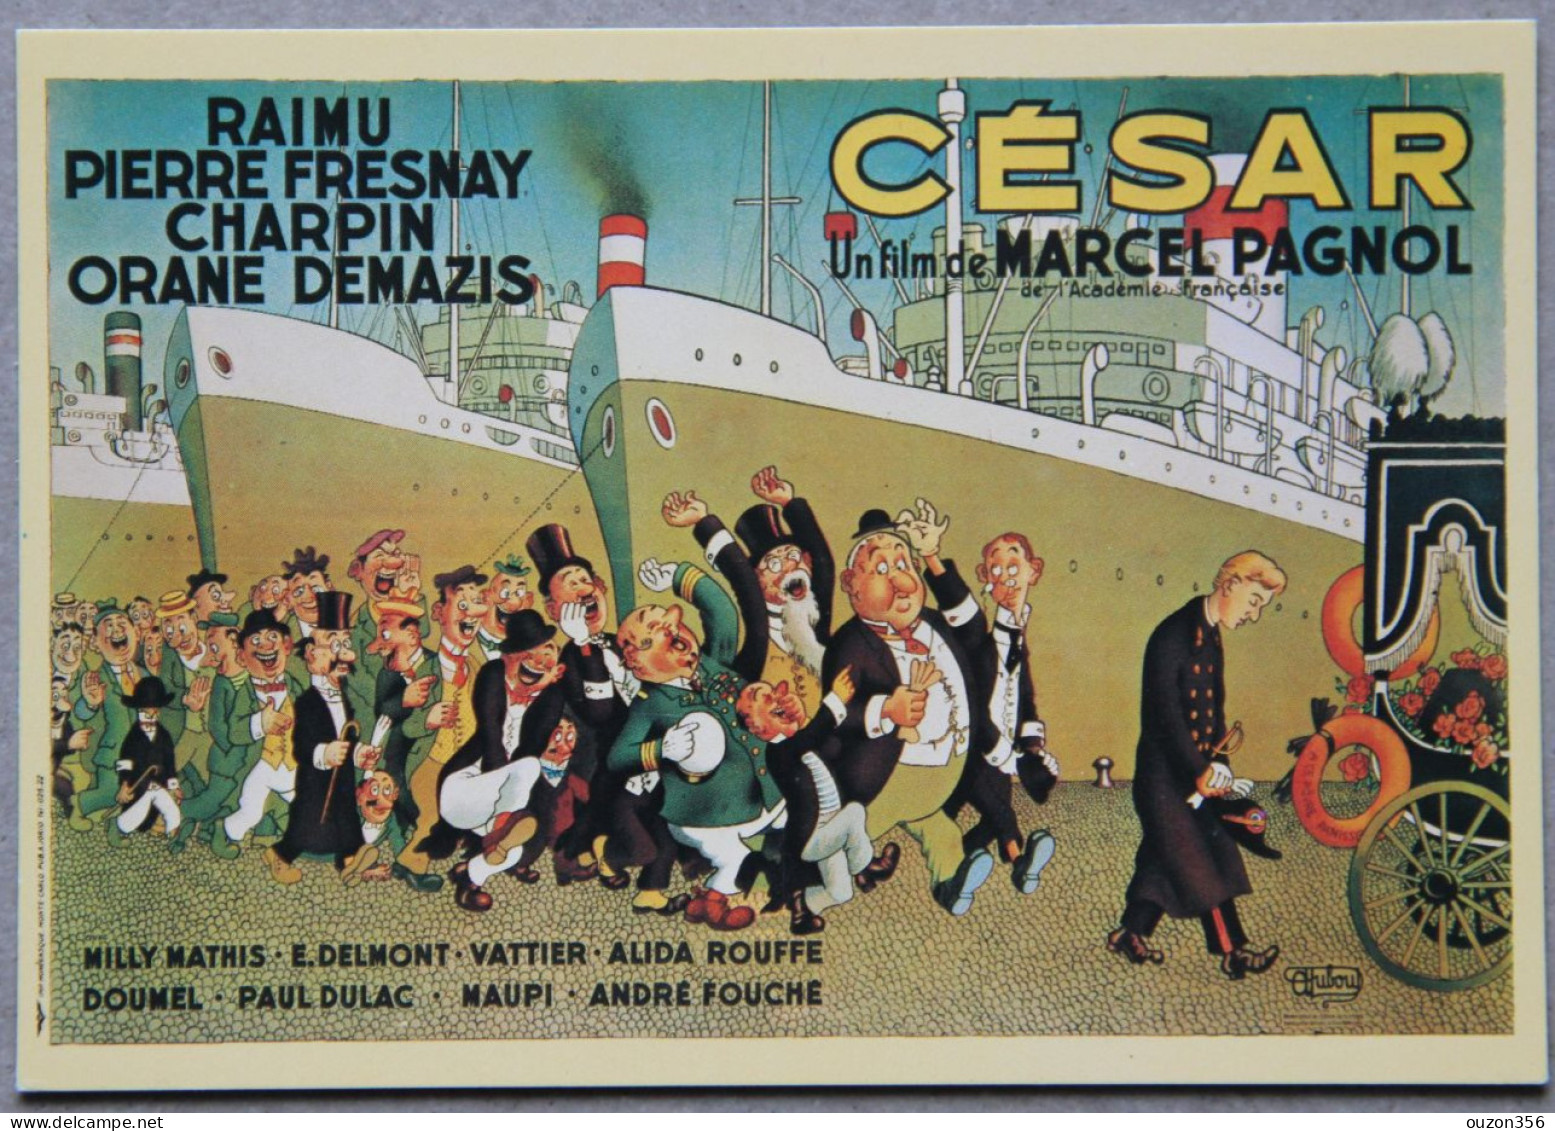 Affiche Albert Dubout, César, Film De Marcel Pagnol, Avec Raimu, Pierre Fresnay, Orane Demazis-Charpin - Plakate Auf Karten